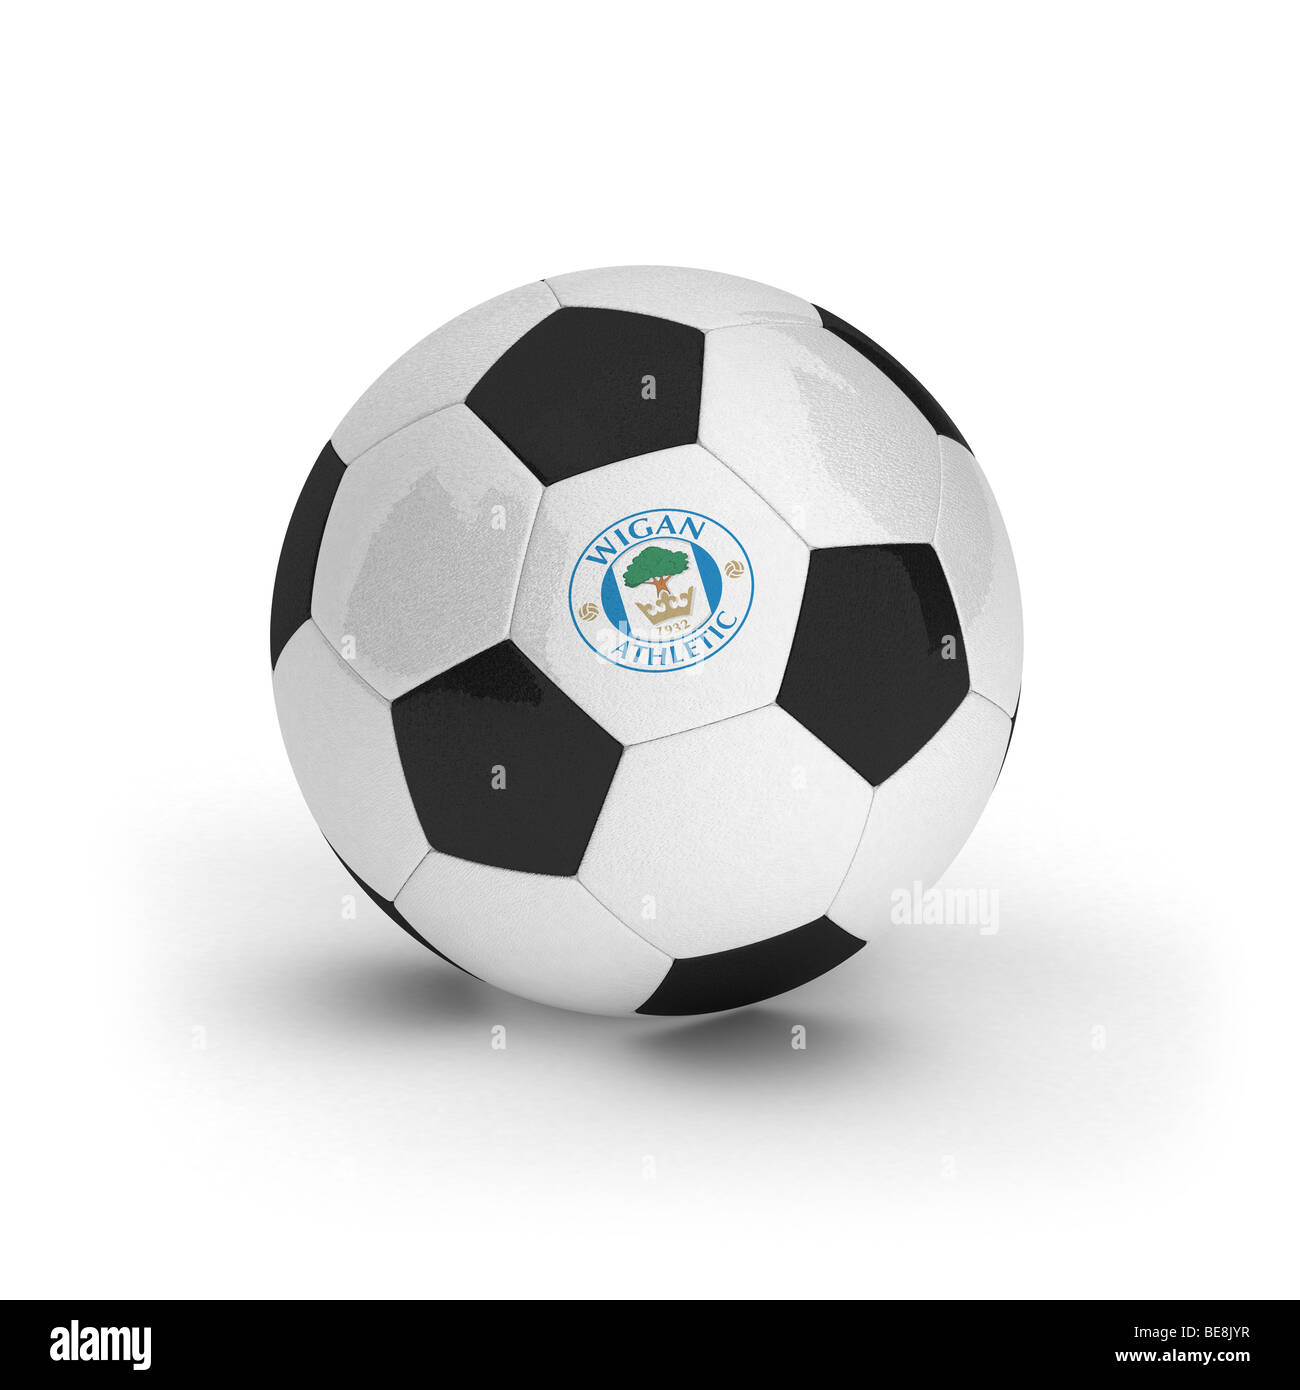 Wigan Athletic Football Club emblème sur un ballon de foot Banque D'Images